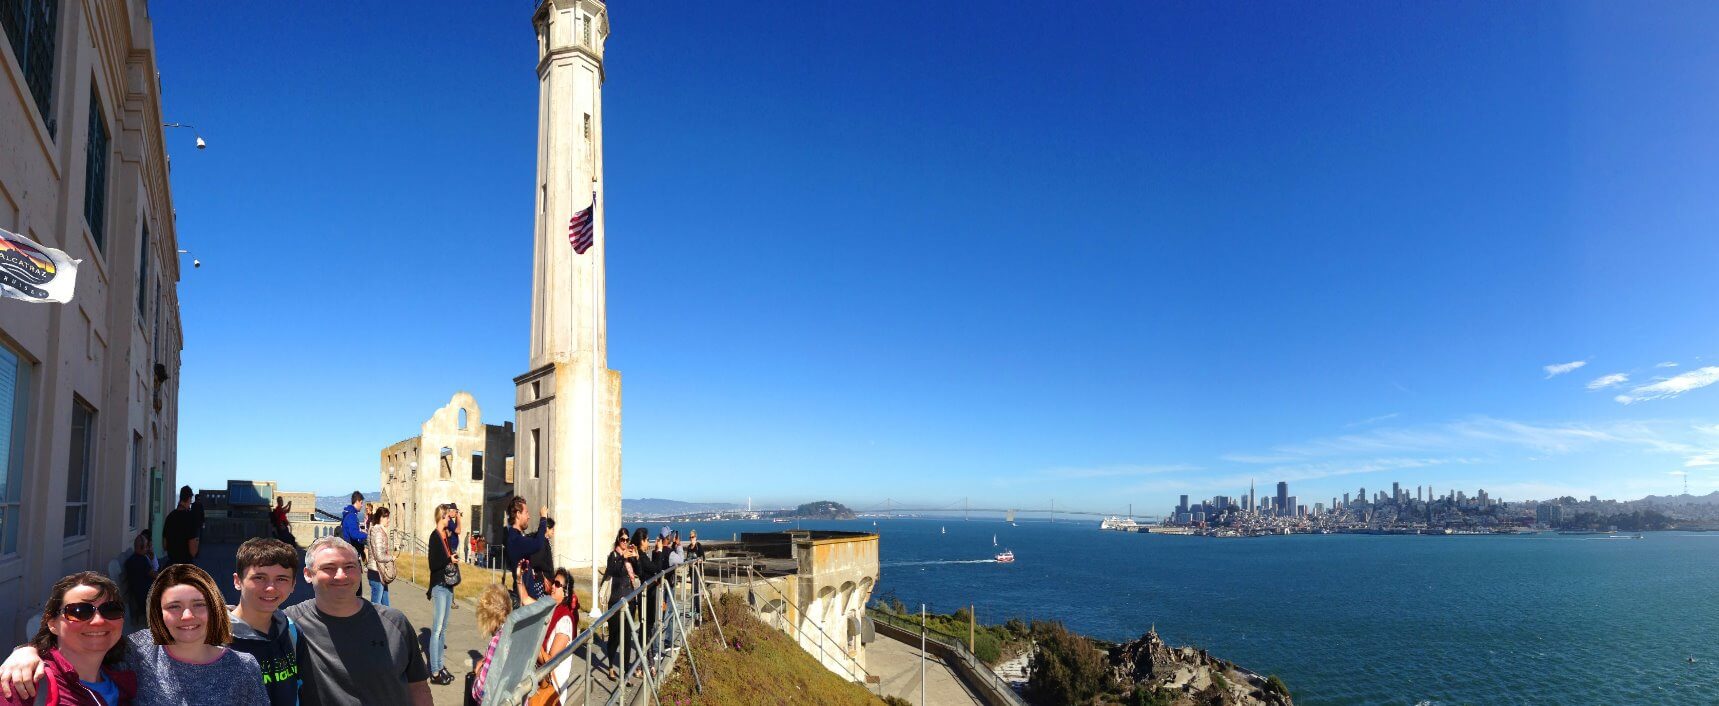 alcatraz-island-tickets-prison-tour-ferry-trip-from-san-francisco